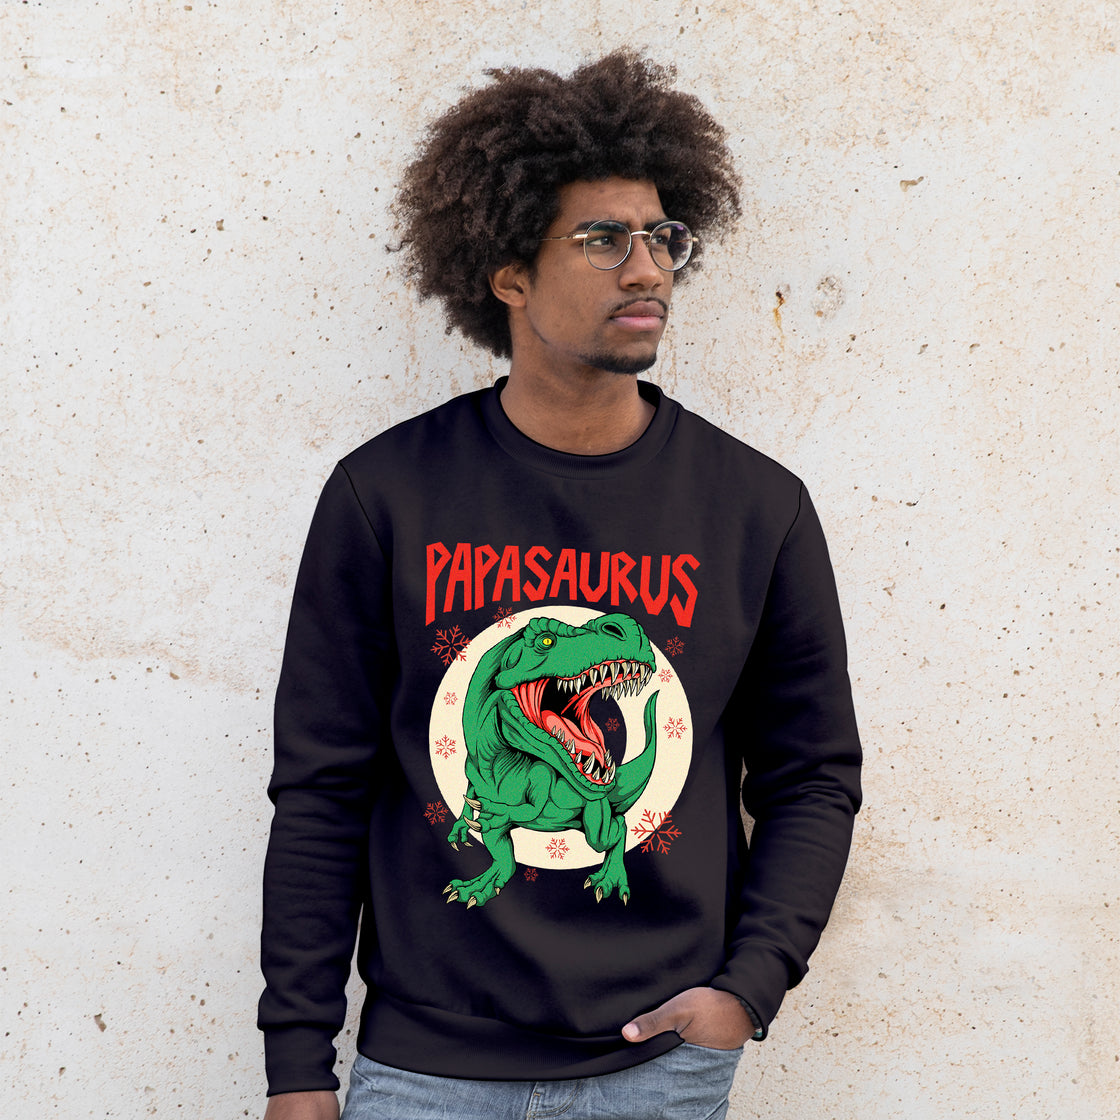 'Papasaurus' Sweatshirt - Custom Gifts 